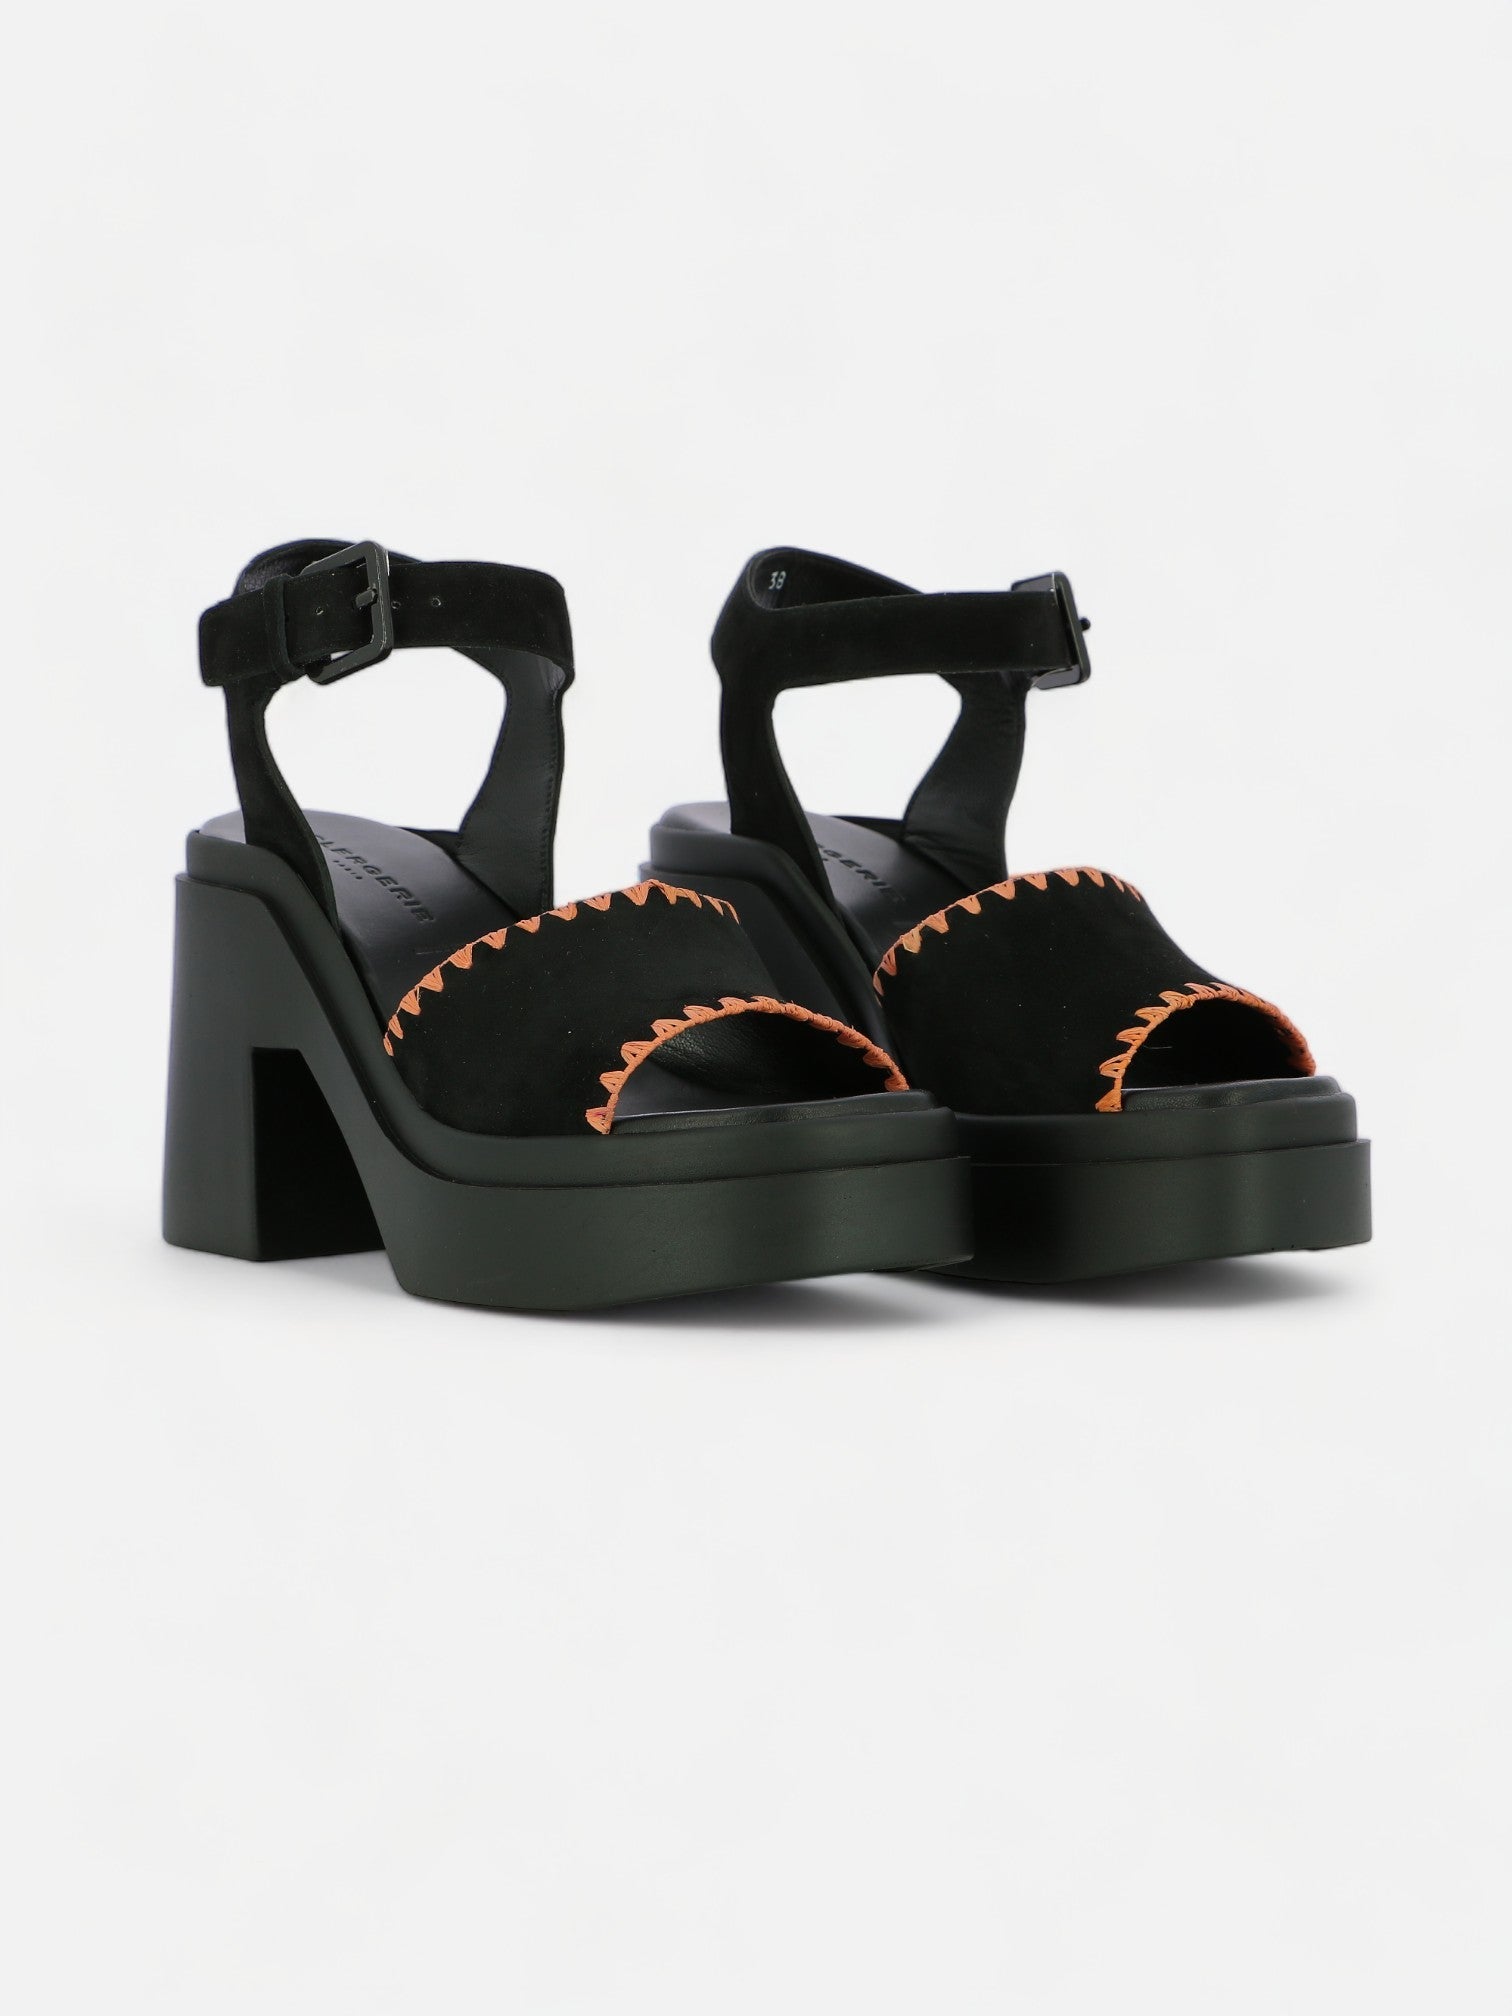 SANDALS - NELIO sandals, suede goatskin black - NELIOSRBACSDEM350 - Clergerie Paris - USA